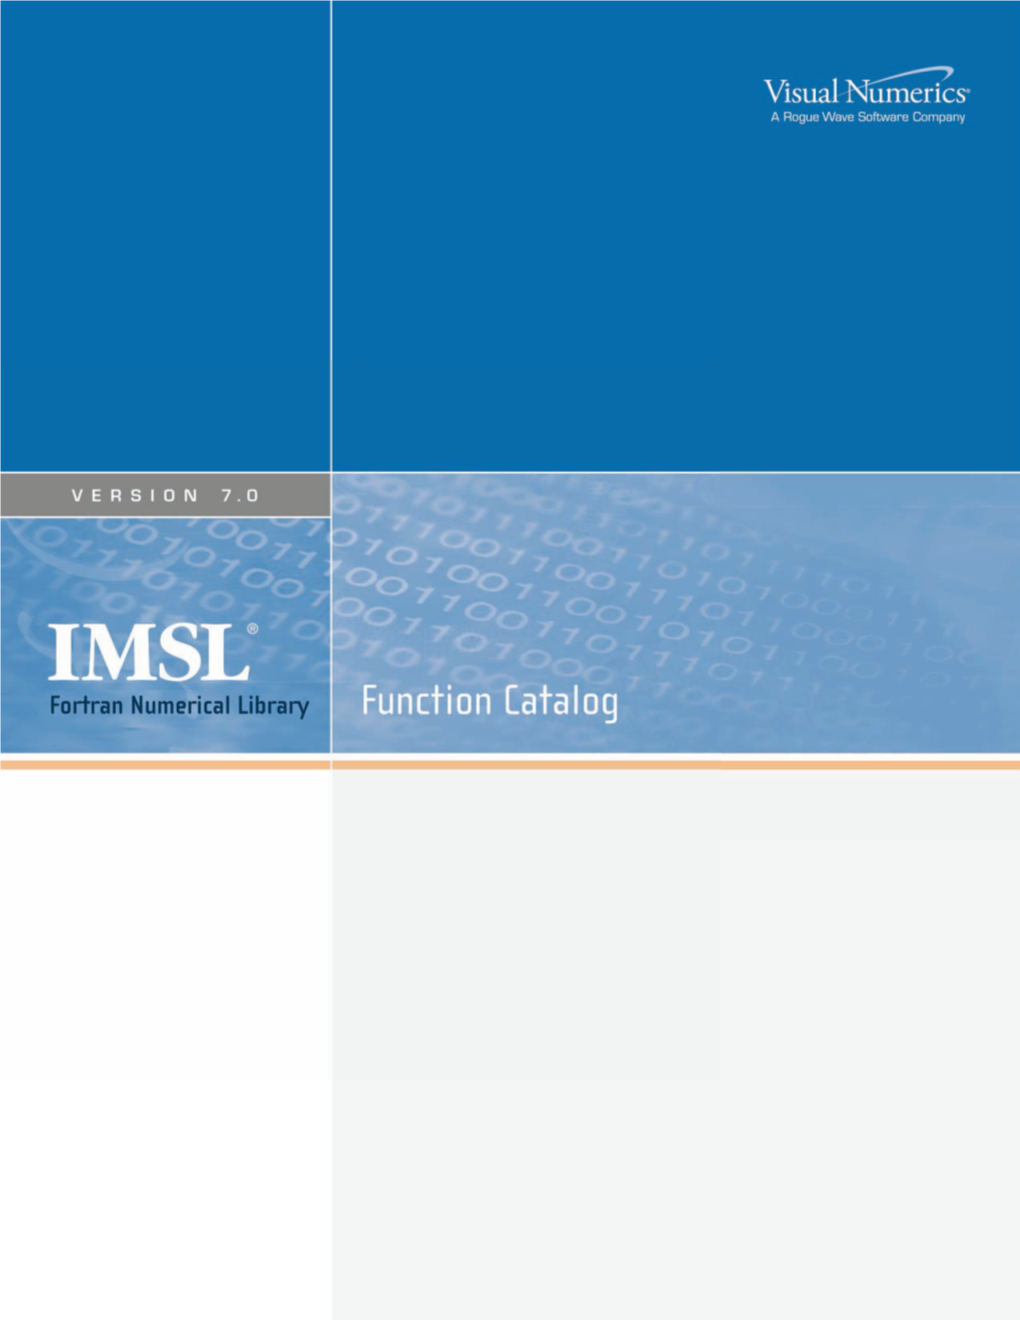 IMSL Fortran Numerical Function Catalog V7.0